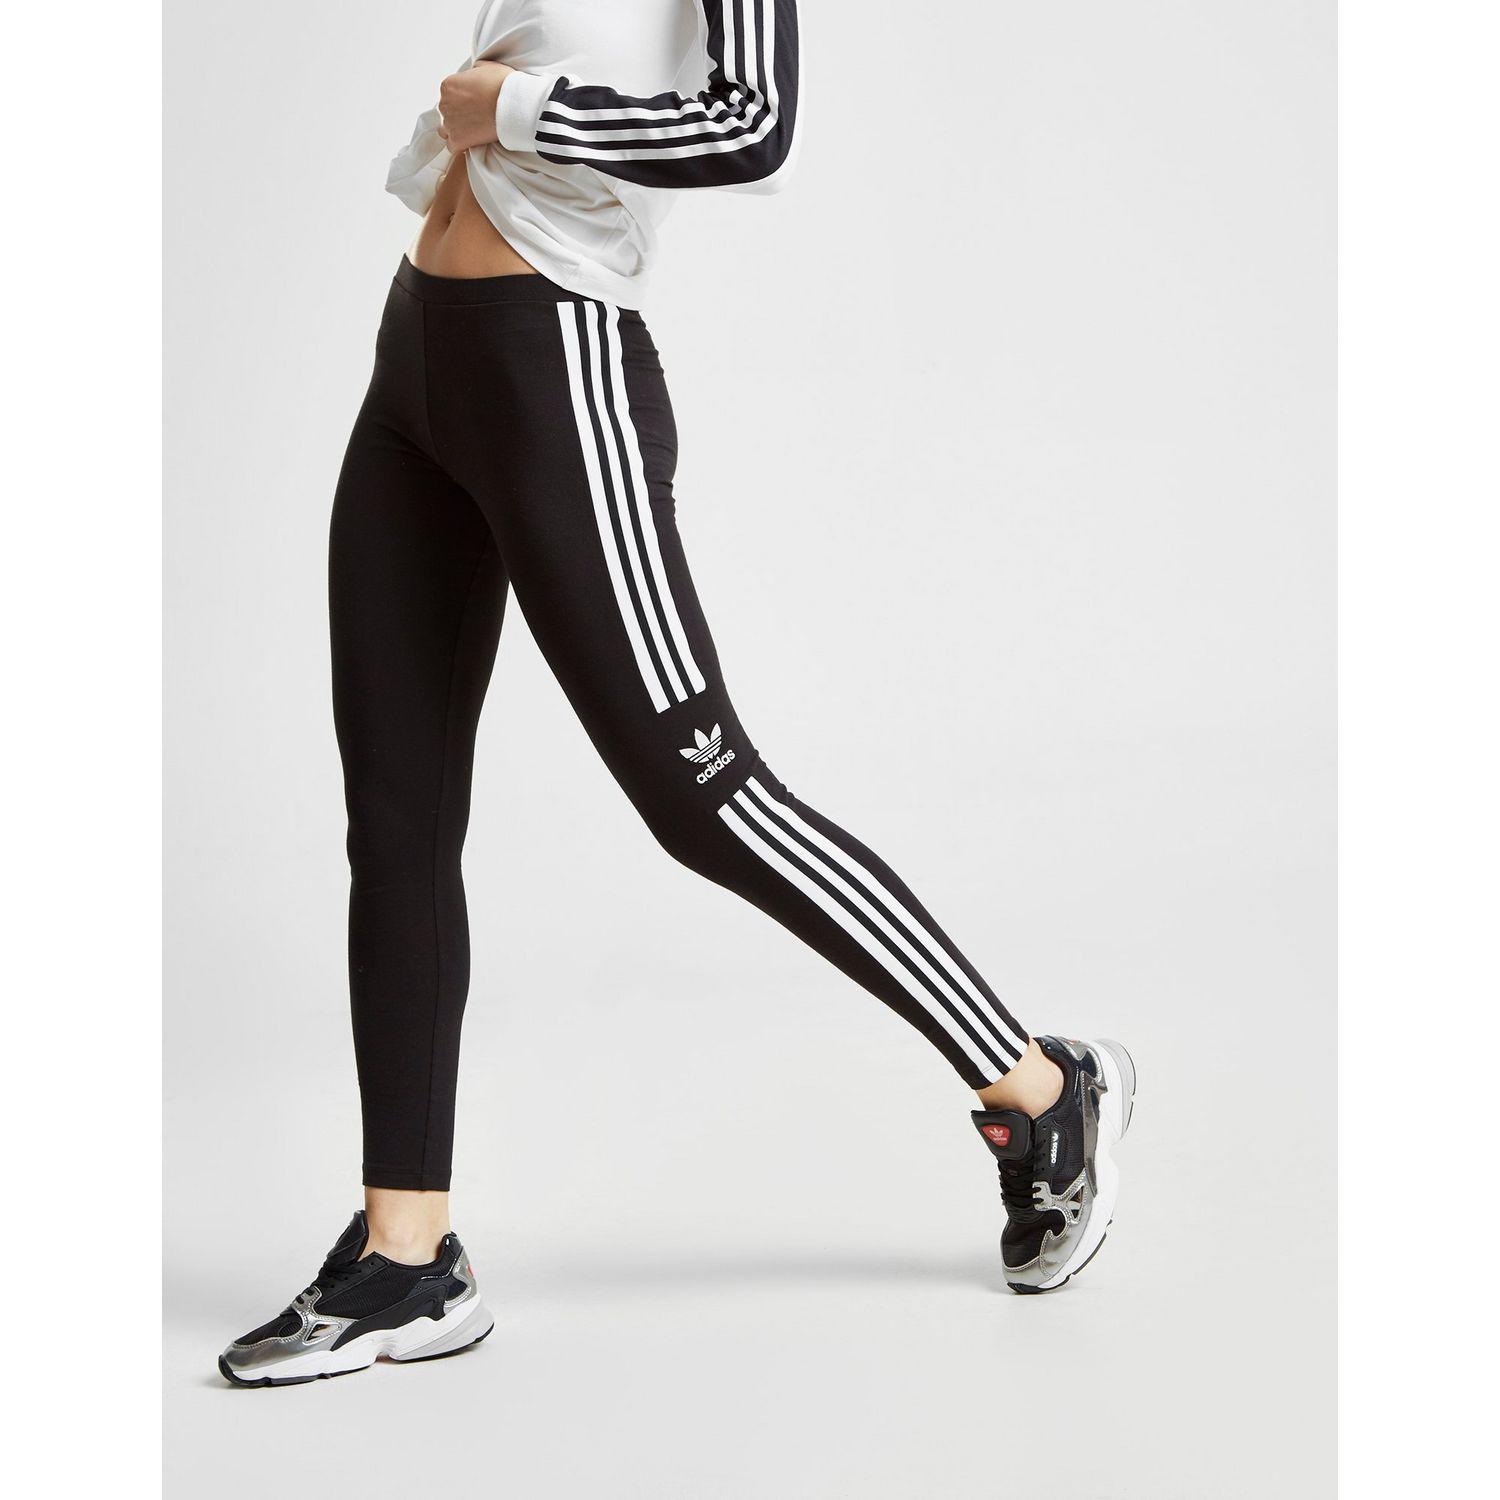 adidas Originals Cotton 3-stripes Trefoil Leggings in Black/White (Black) -  Lyst